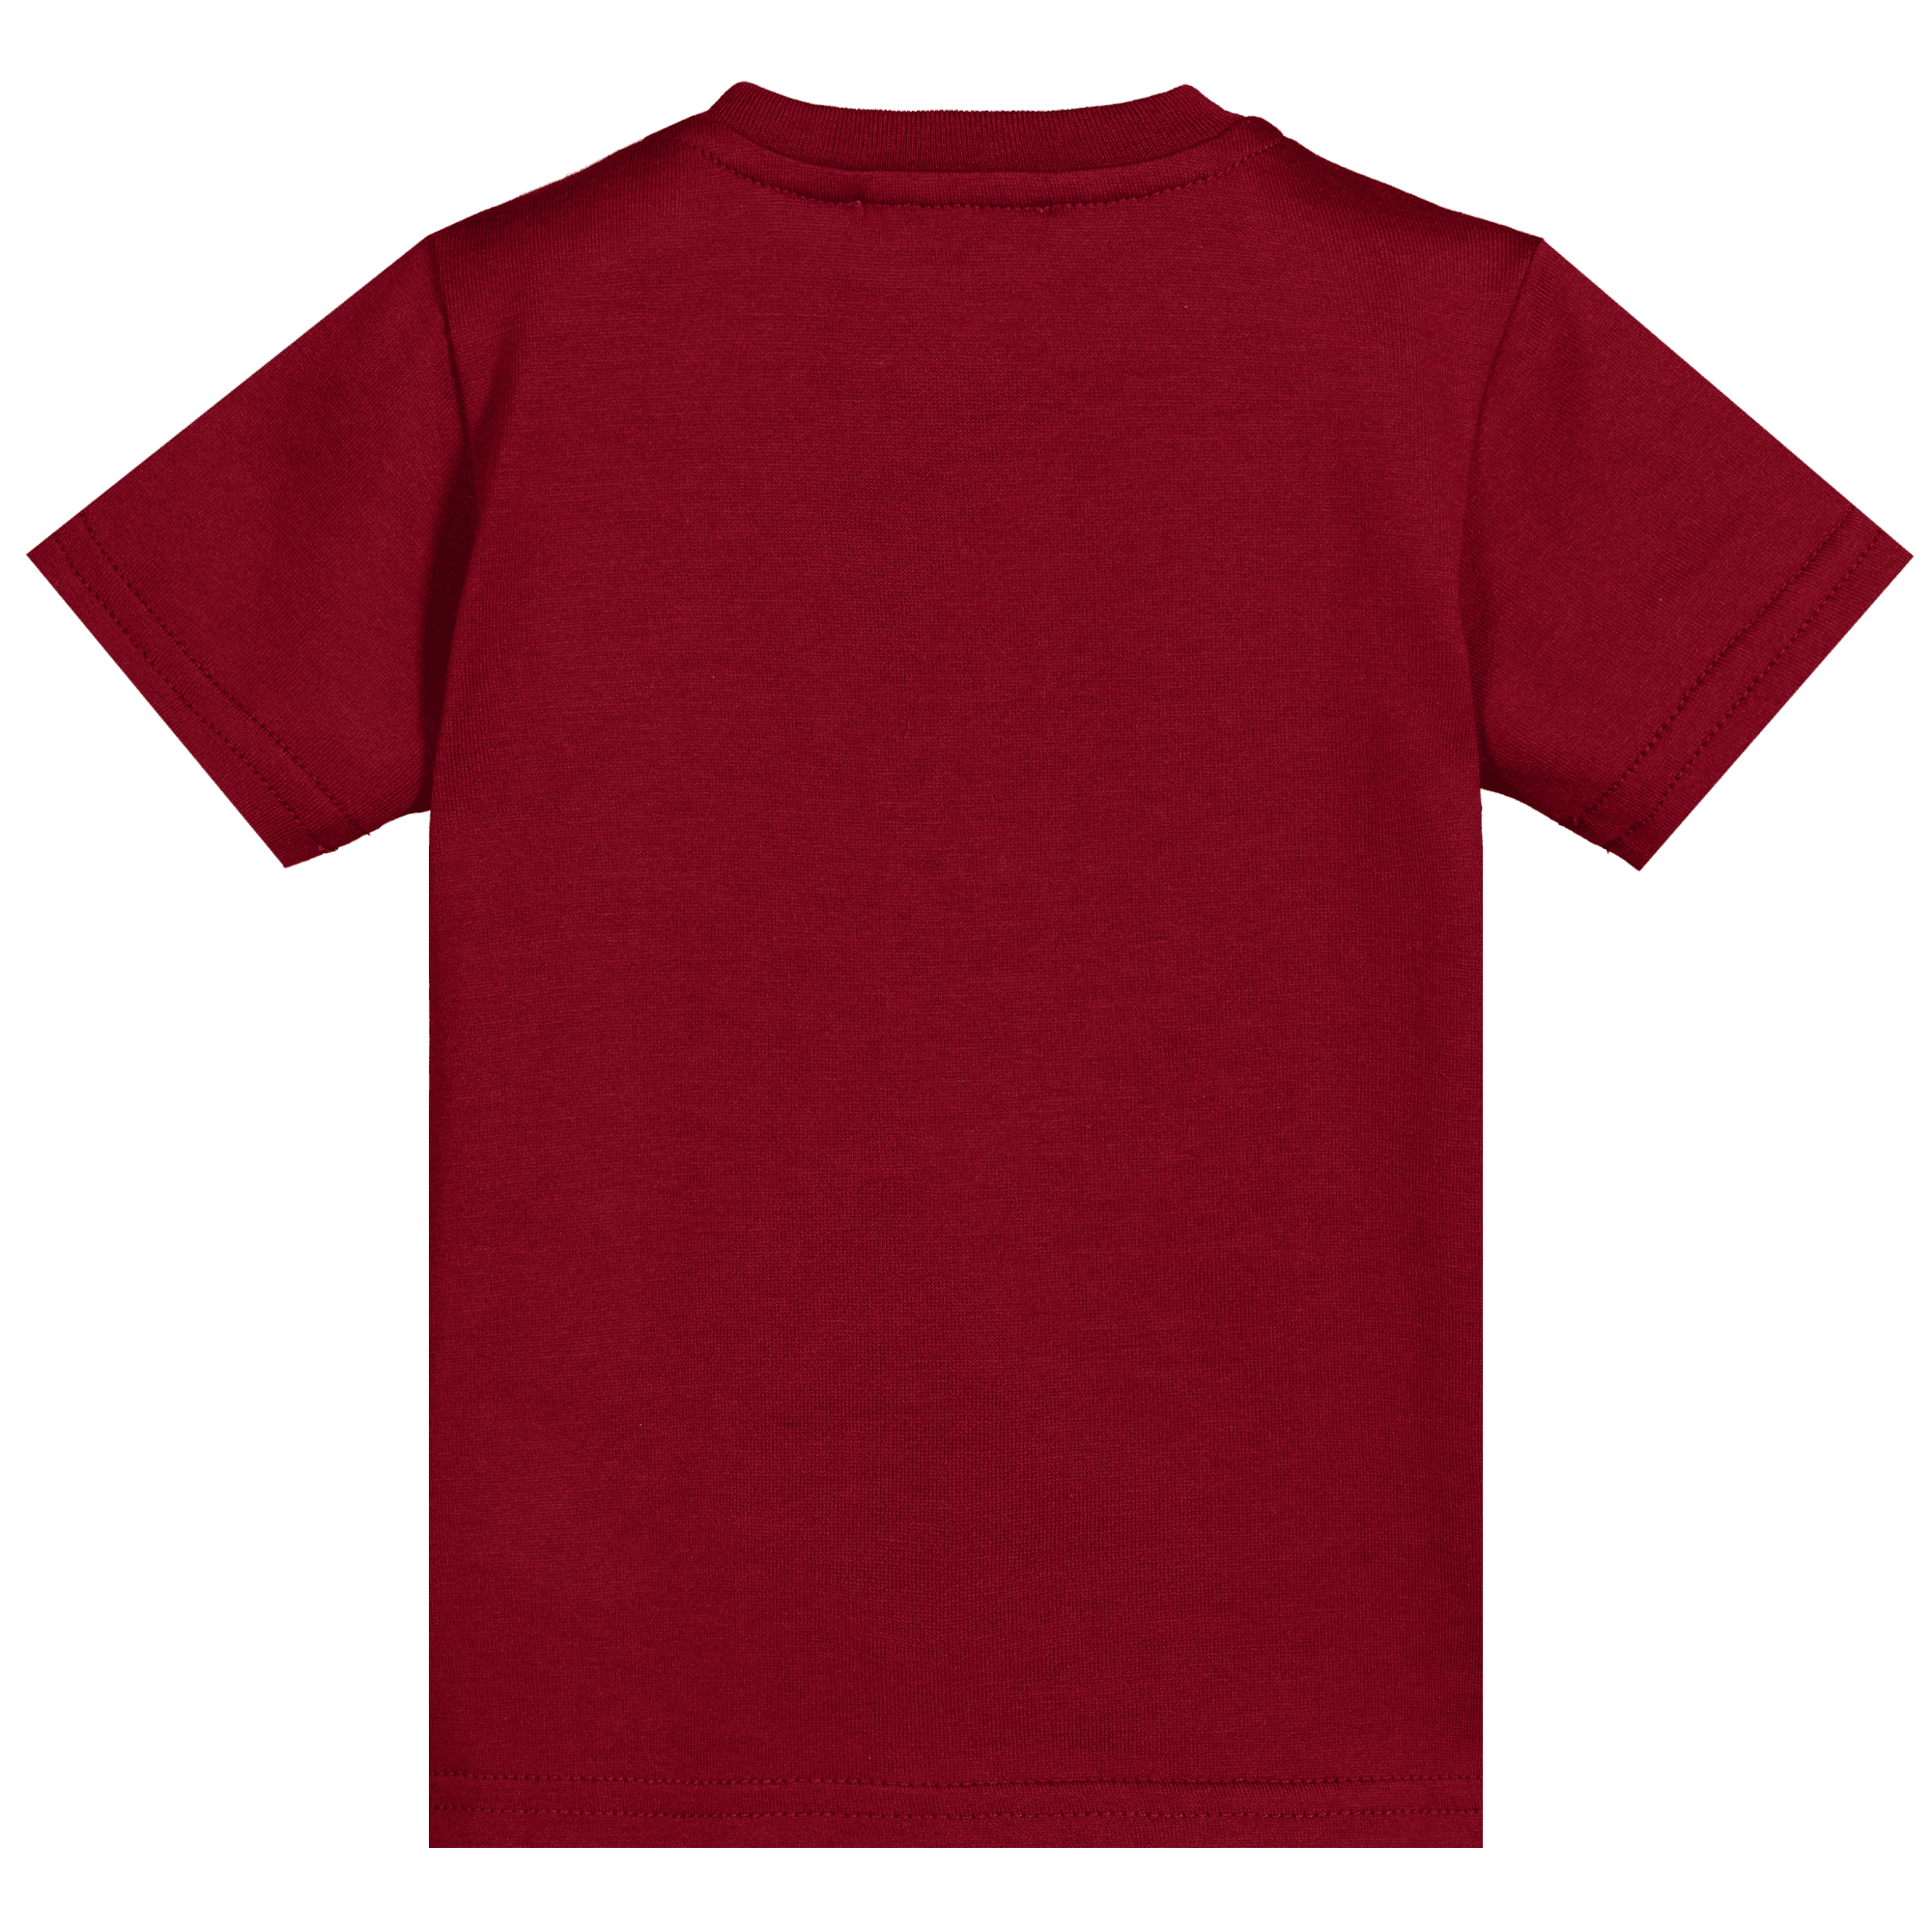 Dolce & Gabbana Boys Cotton Crown T-shirt Red Burgundy 2Y